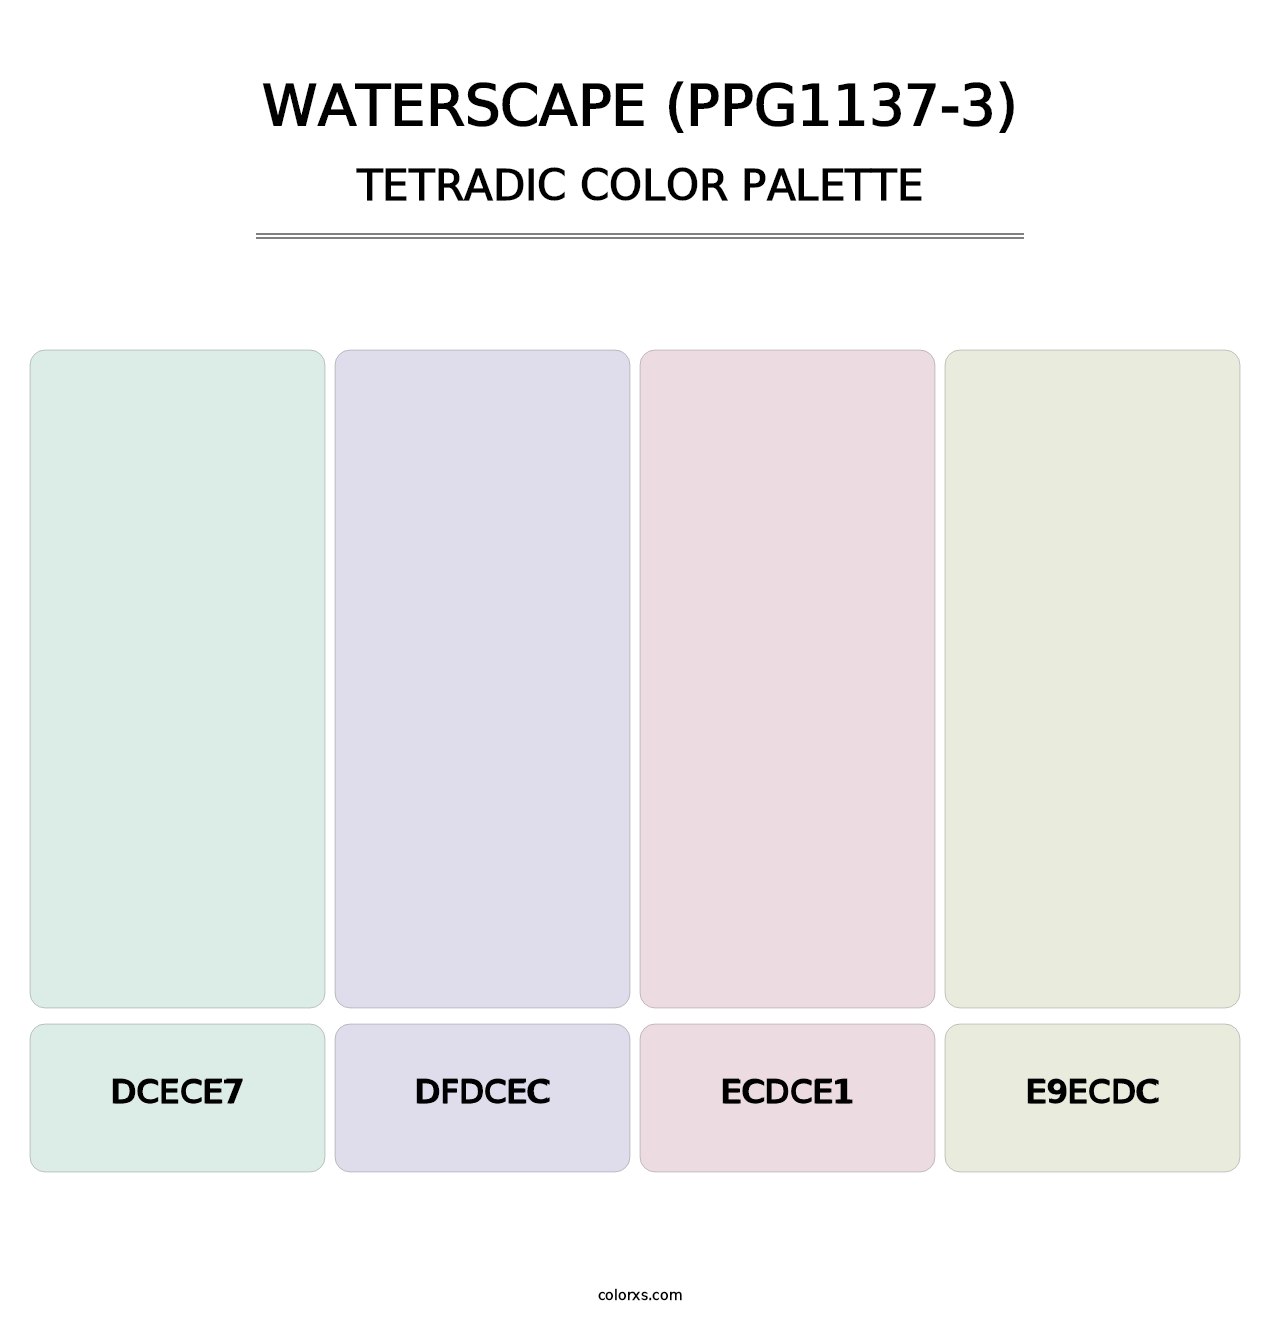 Waterscape (PPG1137-3) - Tetradic Color Palette